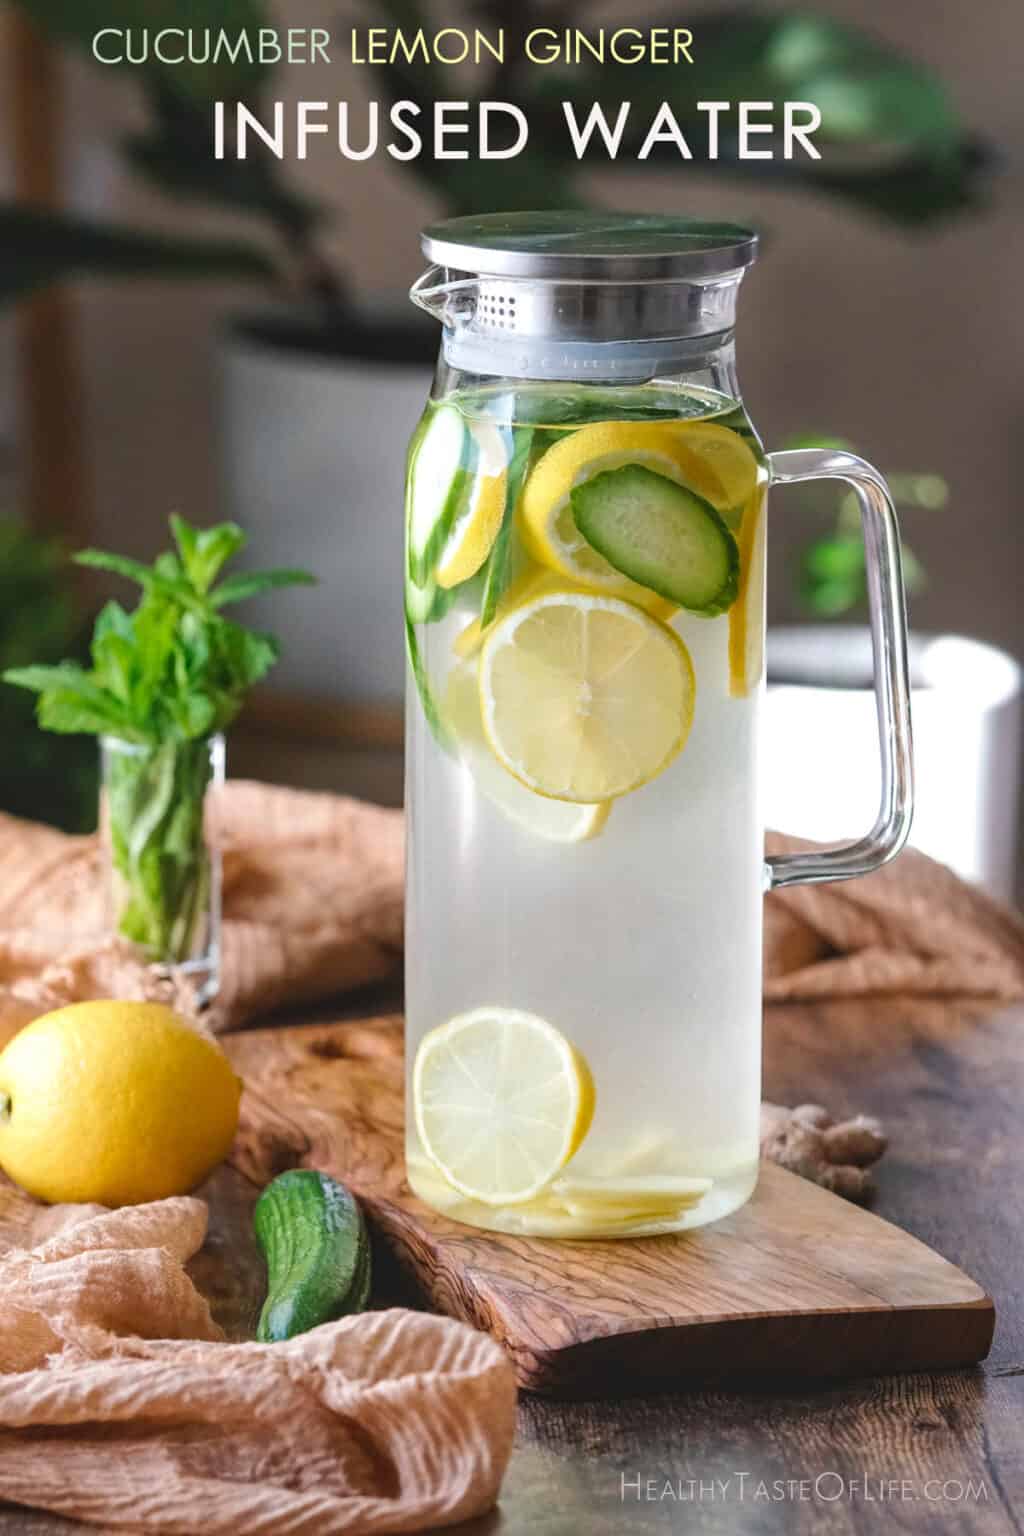 Cucumber Lemon Ginger Water Recipe Benefits Healthy Taste Of Life 1259